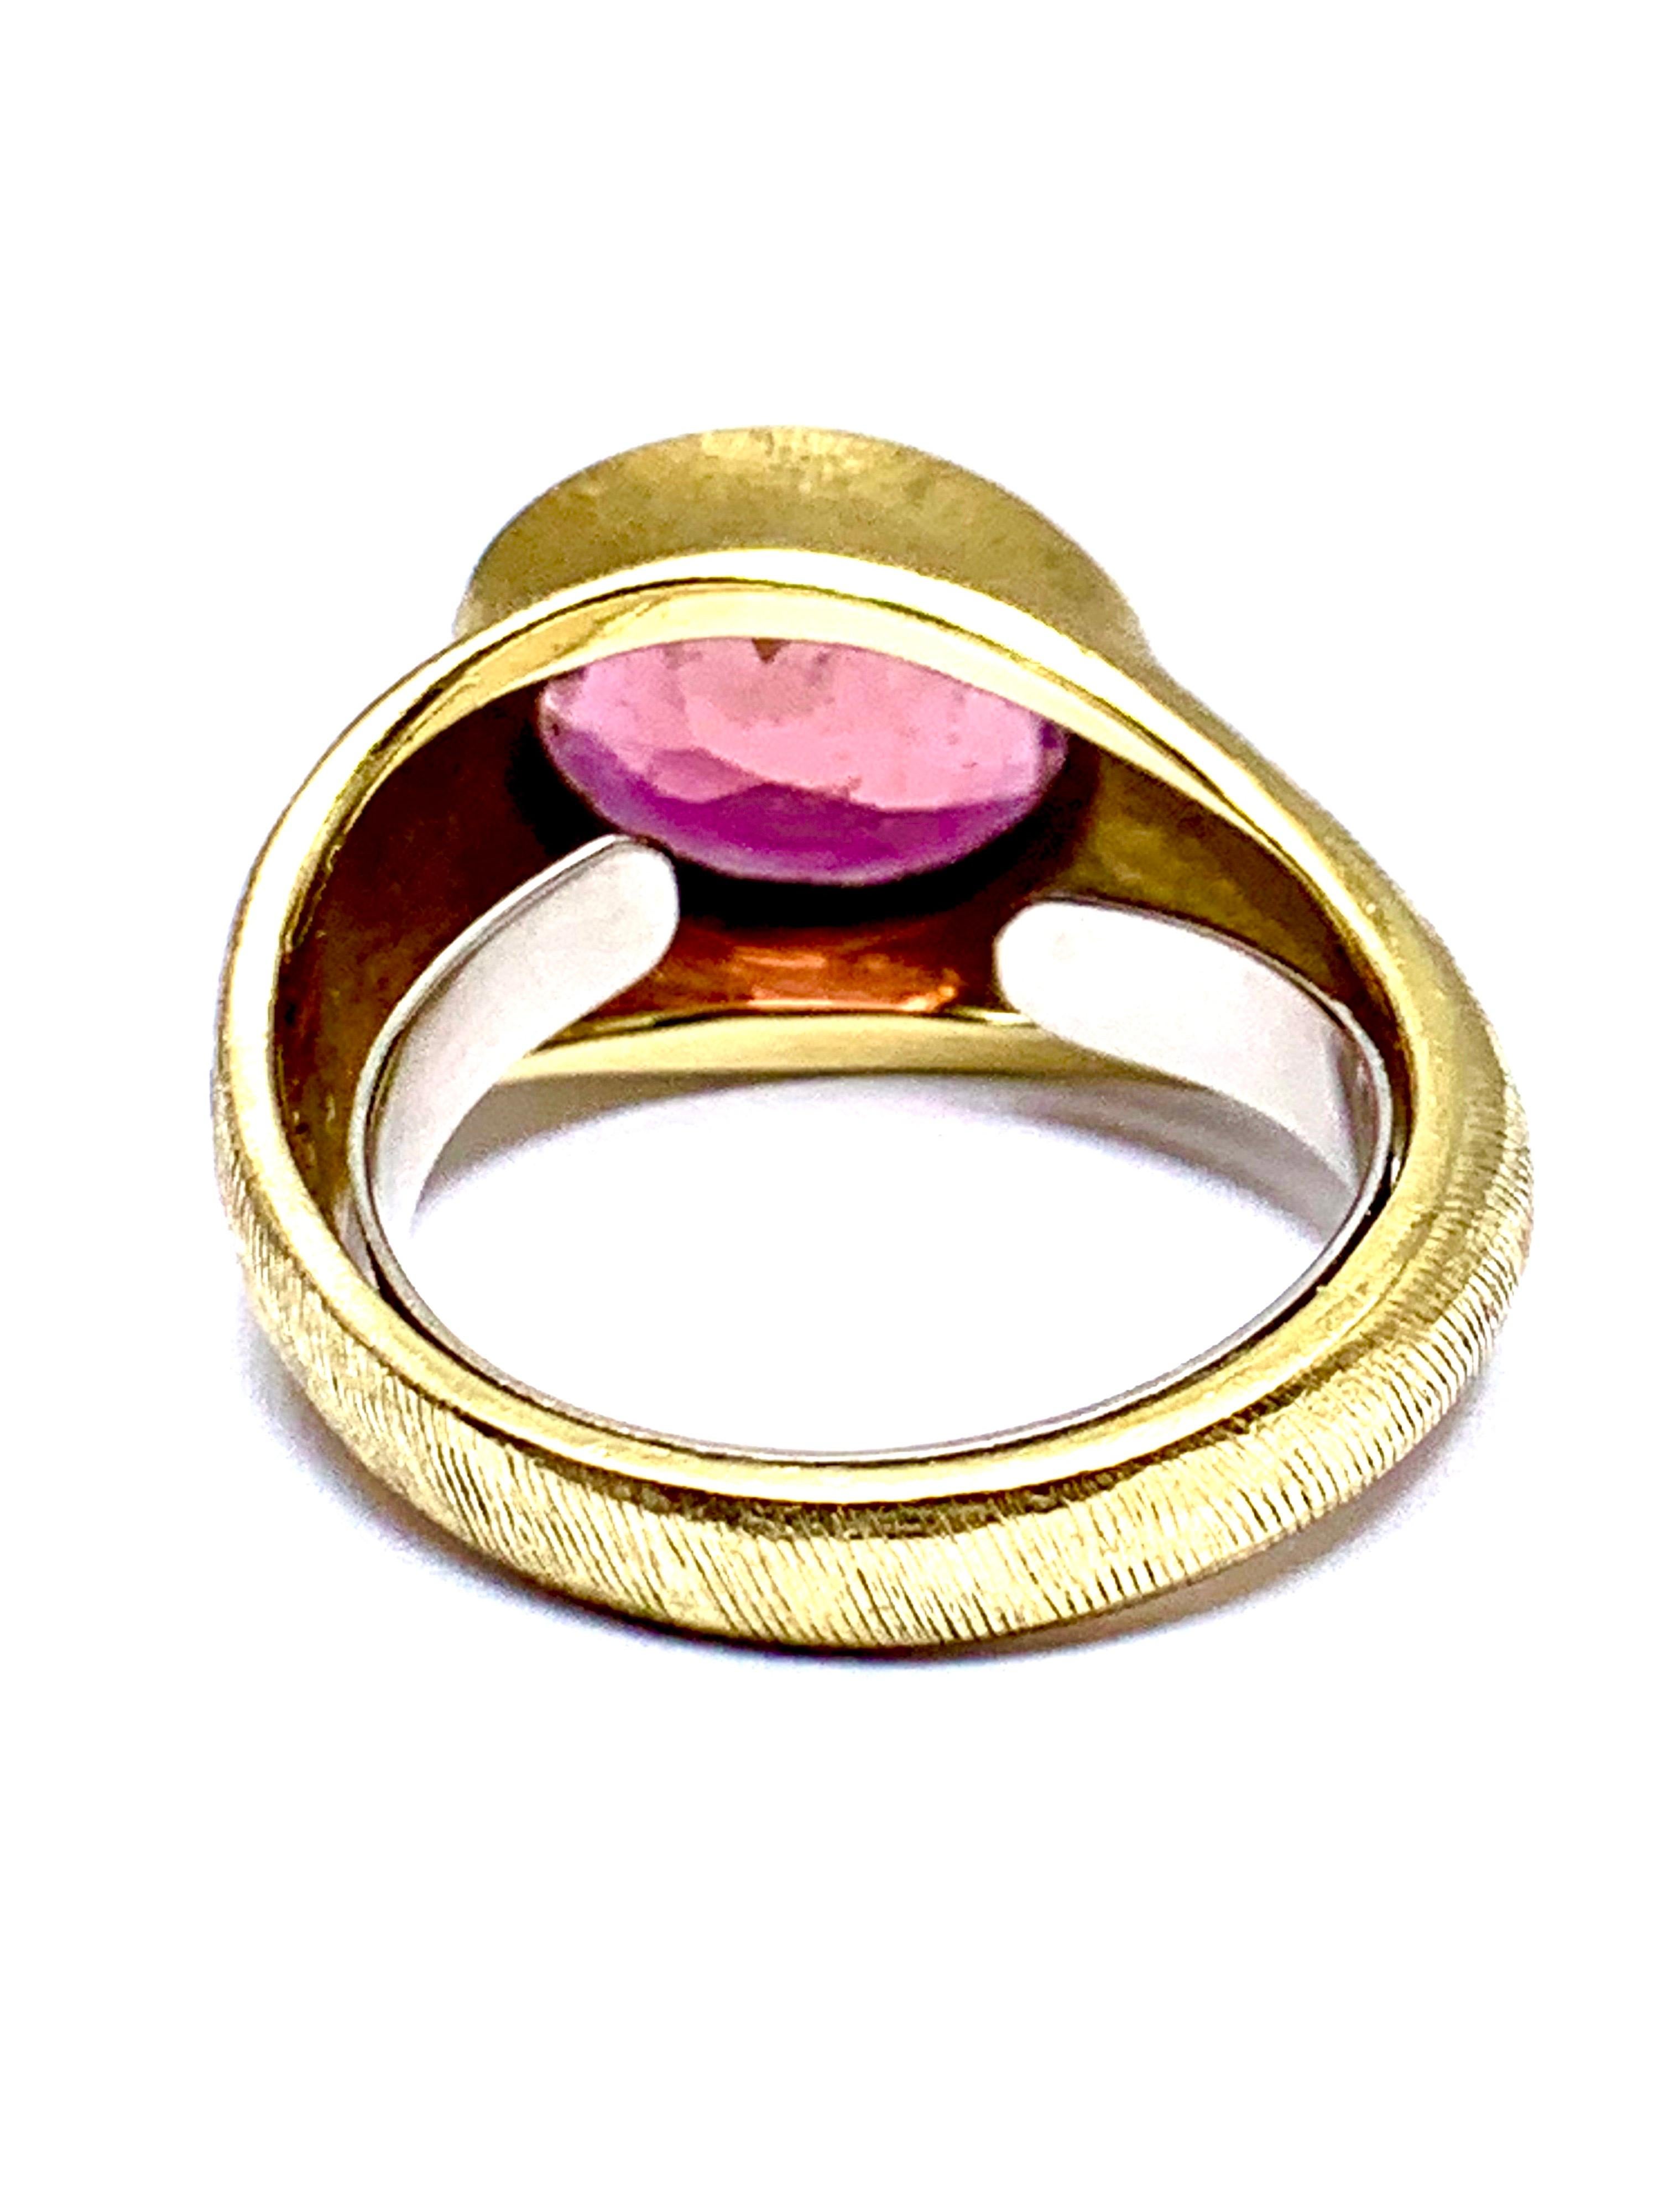 Burle Marx 3.57 Carat Faceted Oval Pink Tourmaline and 18 Karat Yellow Gold Ring 1